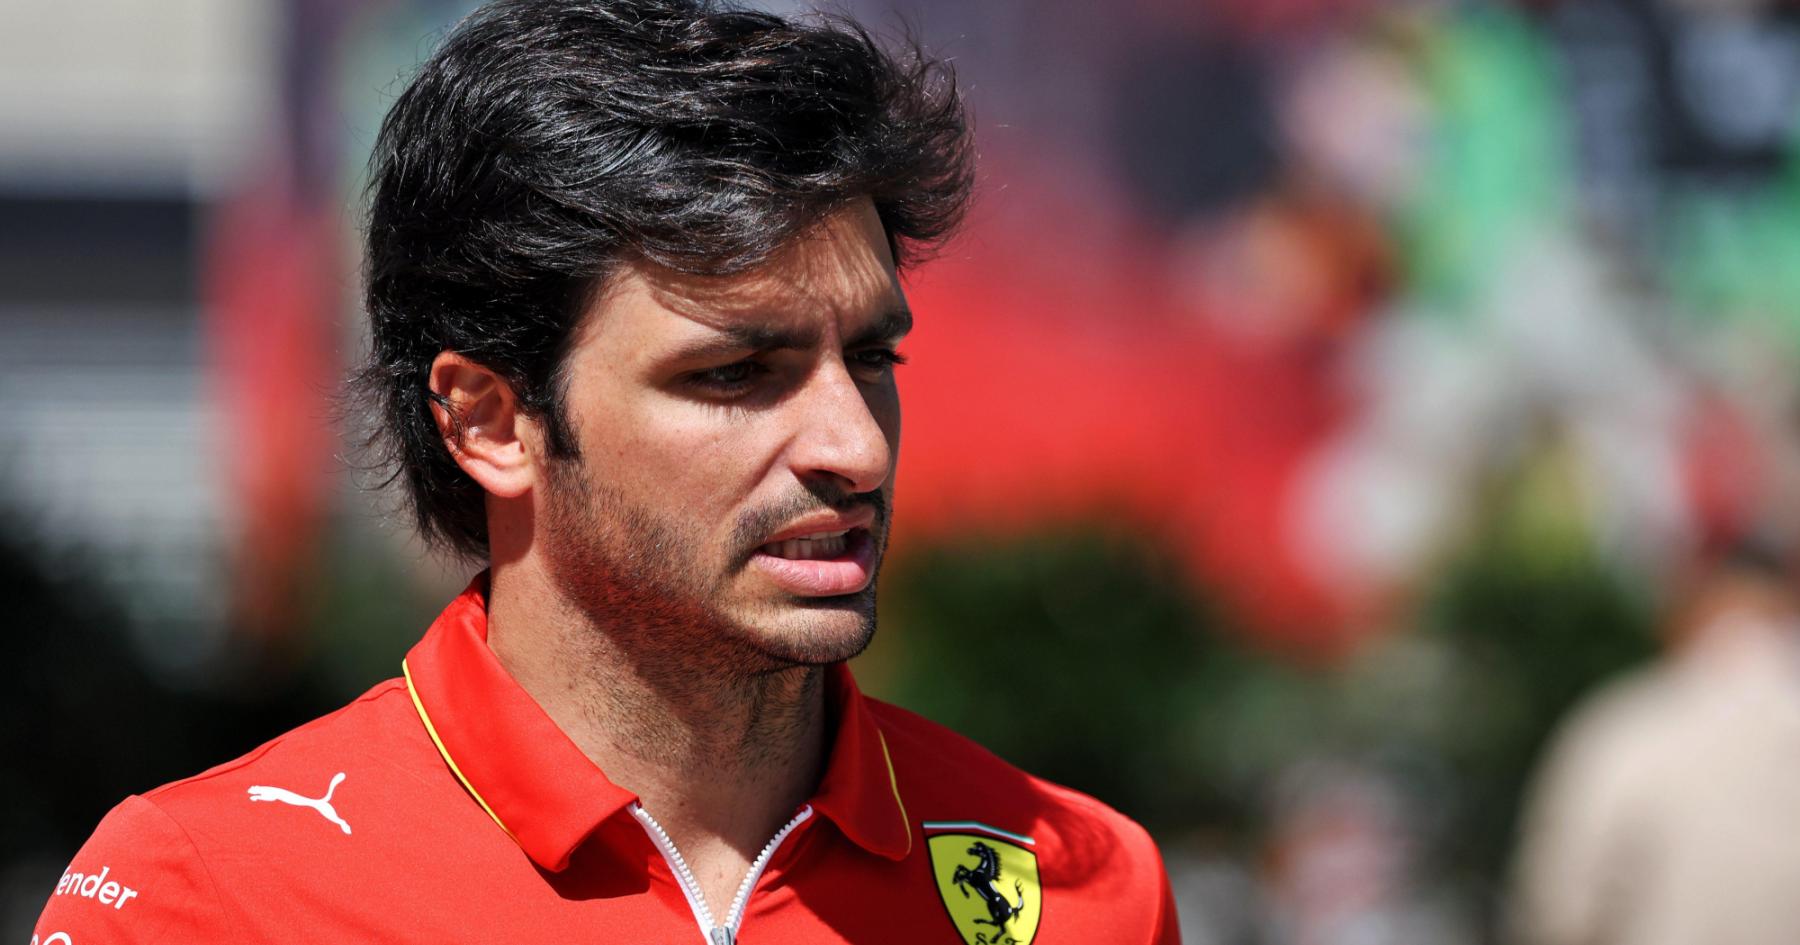 Leaving Maranello: Sainz's Bittersweet Farewell to Ferrari